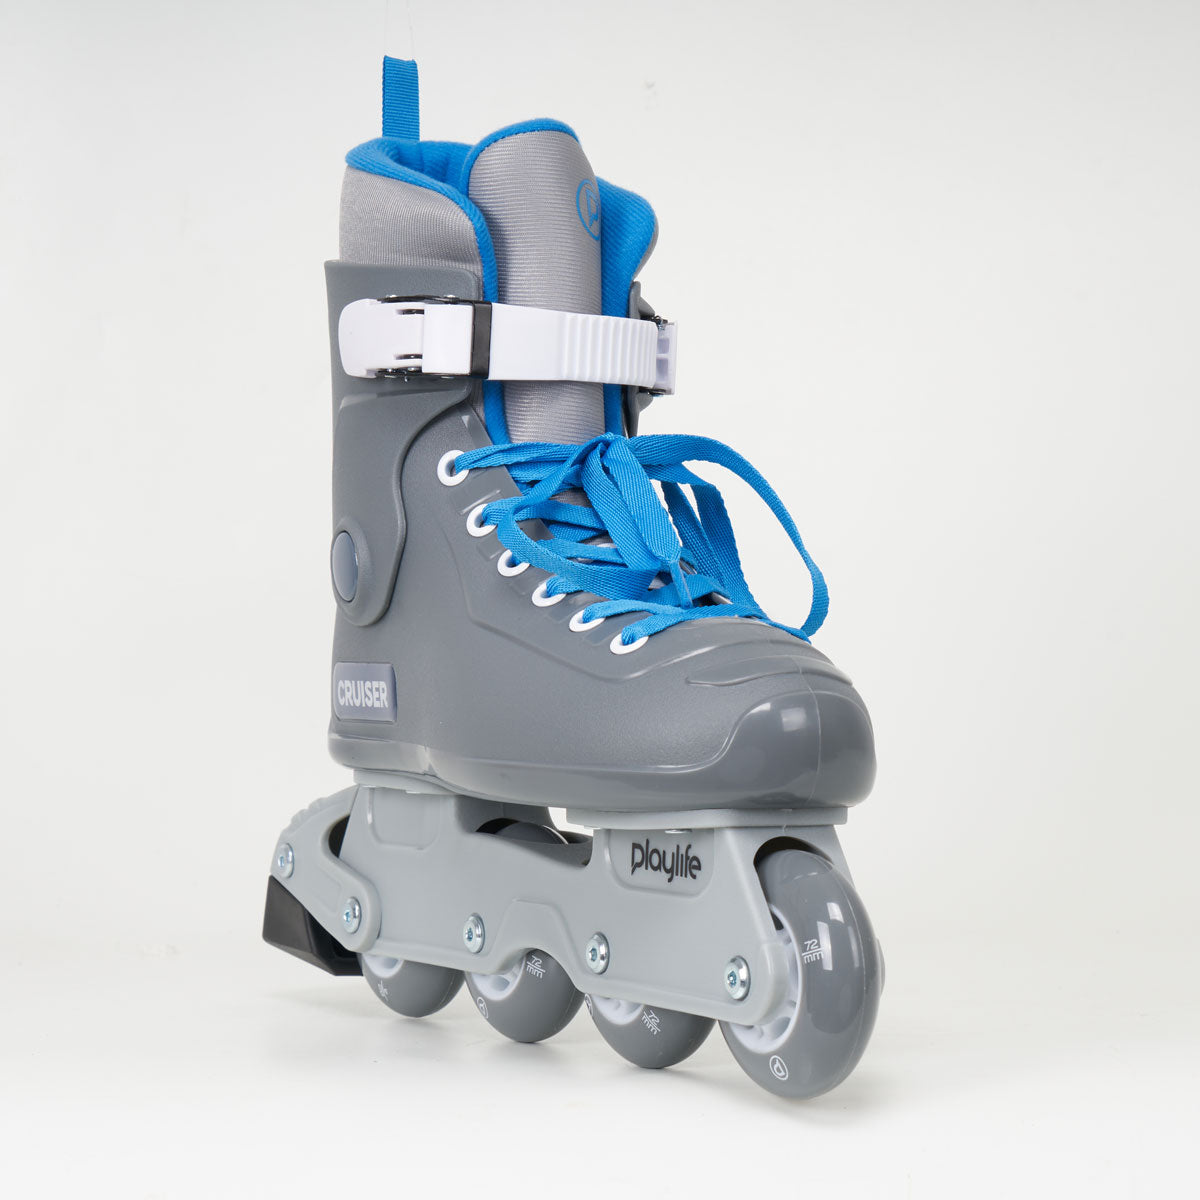 Playlife Cruiser Junior Adjustable Skates - Grey